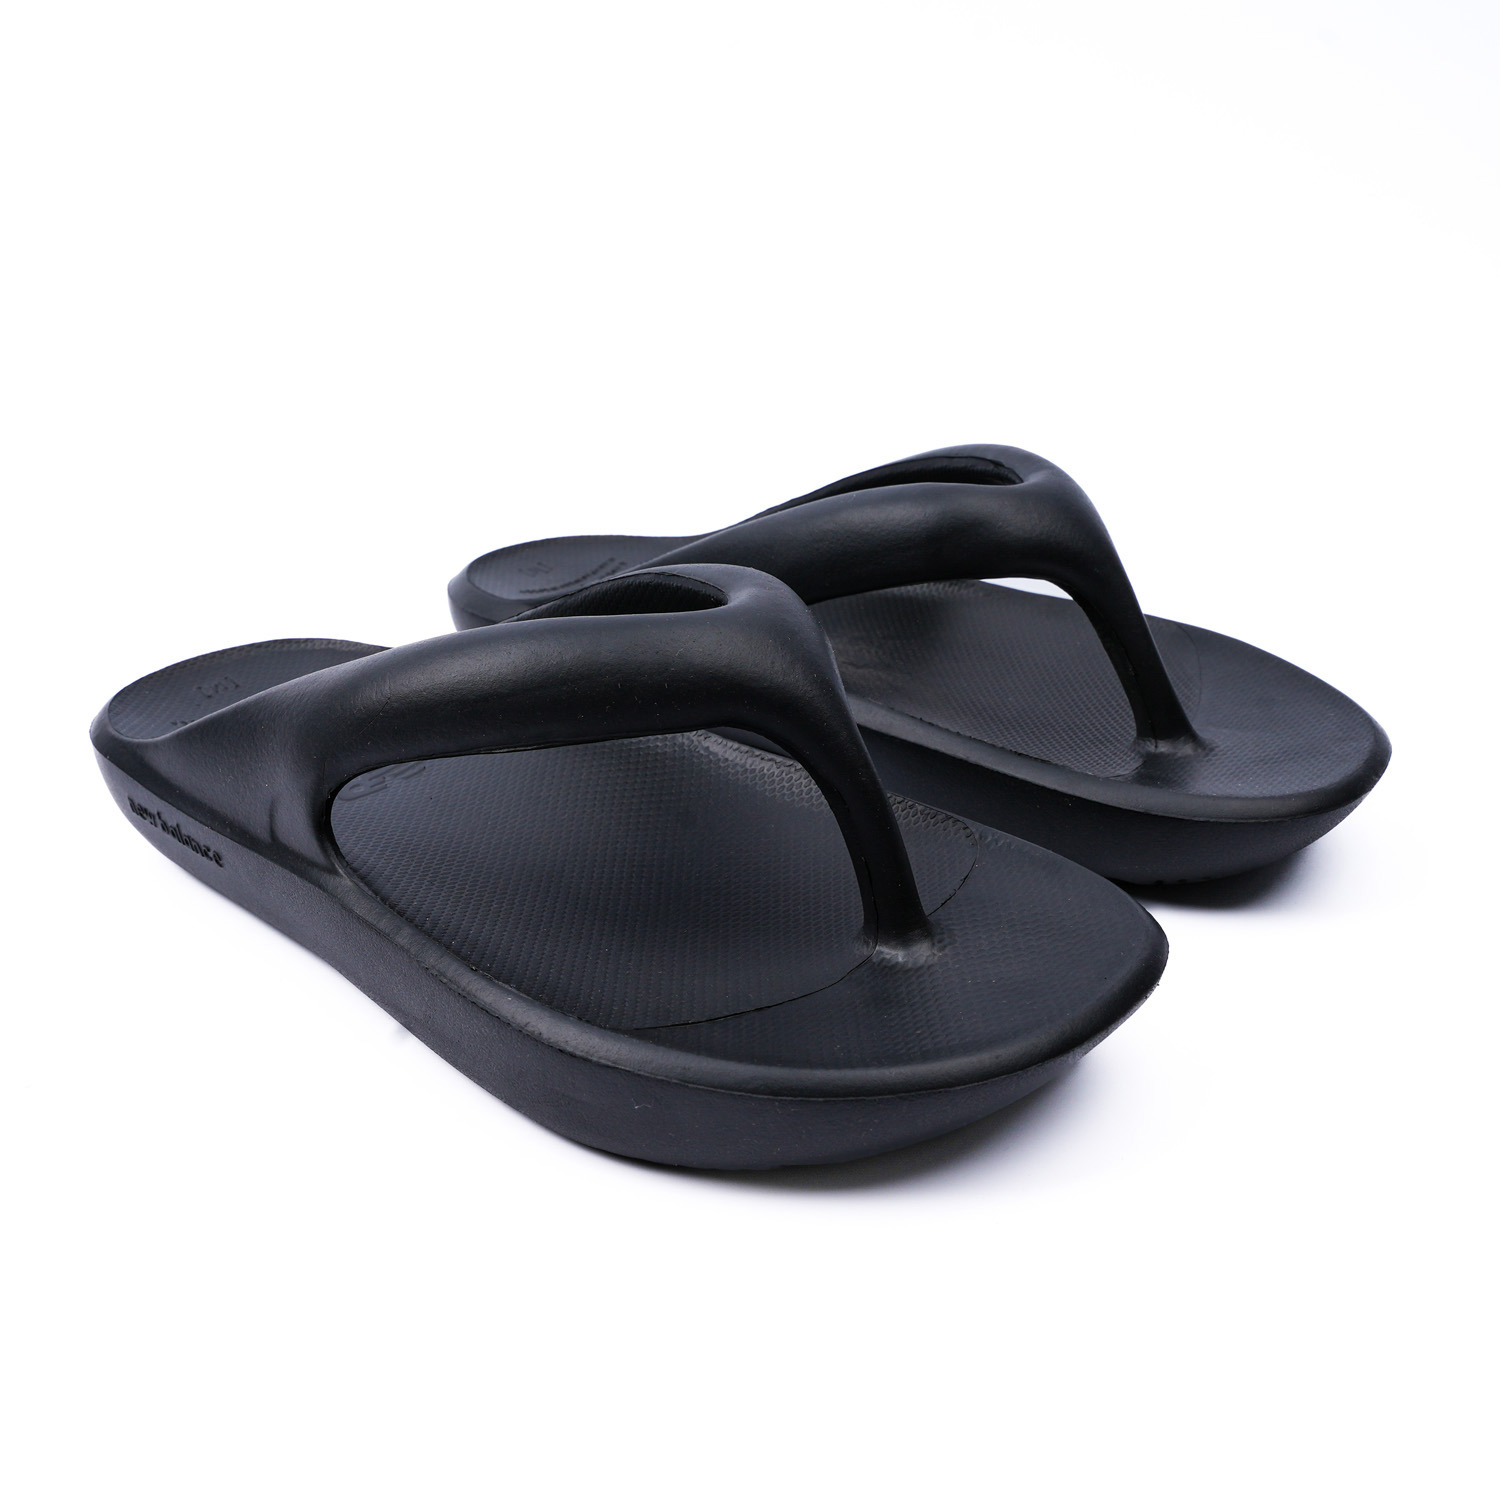 Taw & Toe x New Balance 5601 series Slides Black